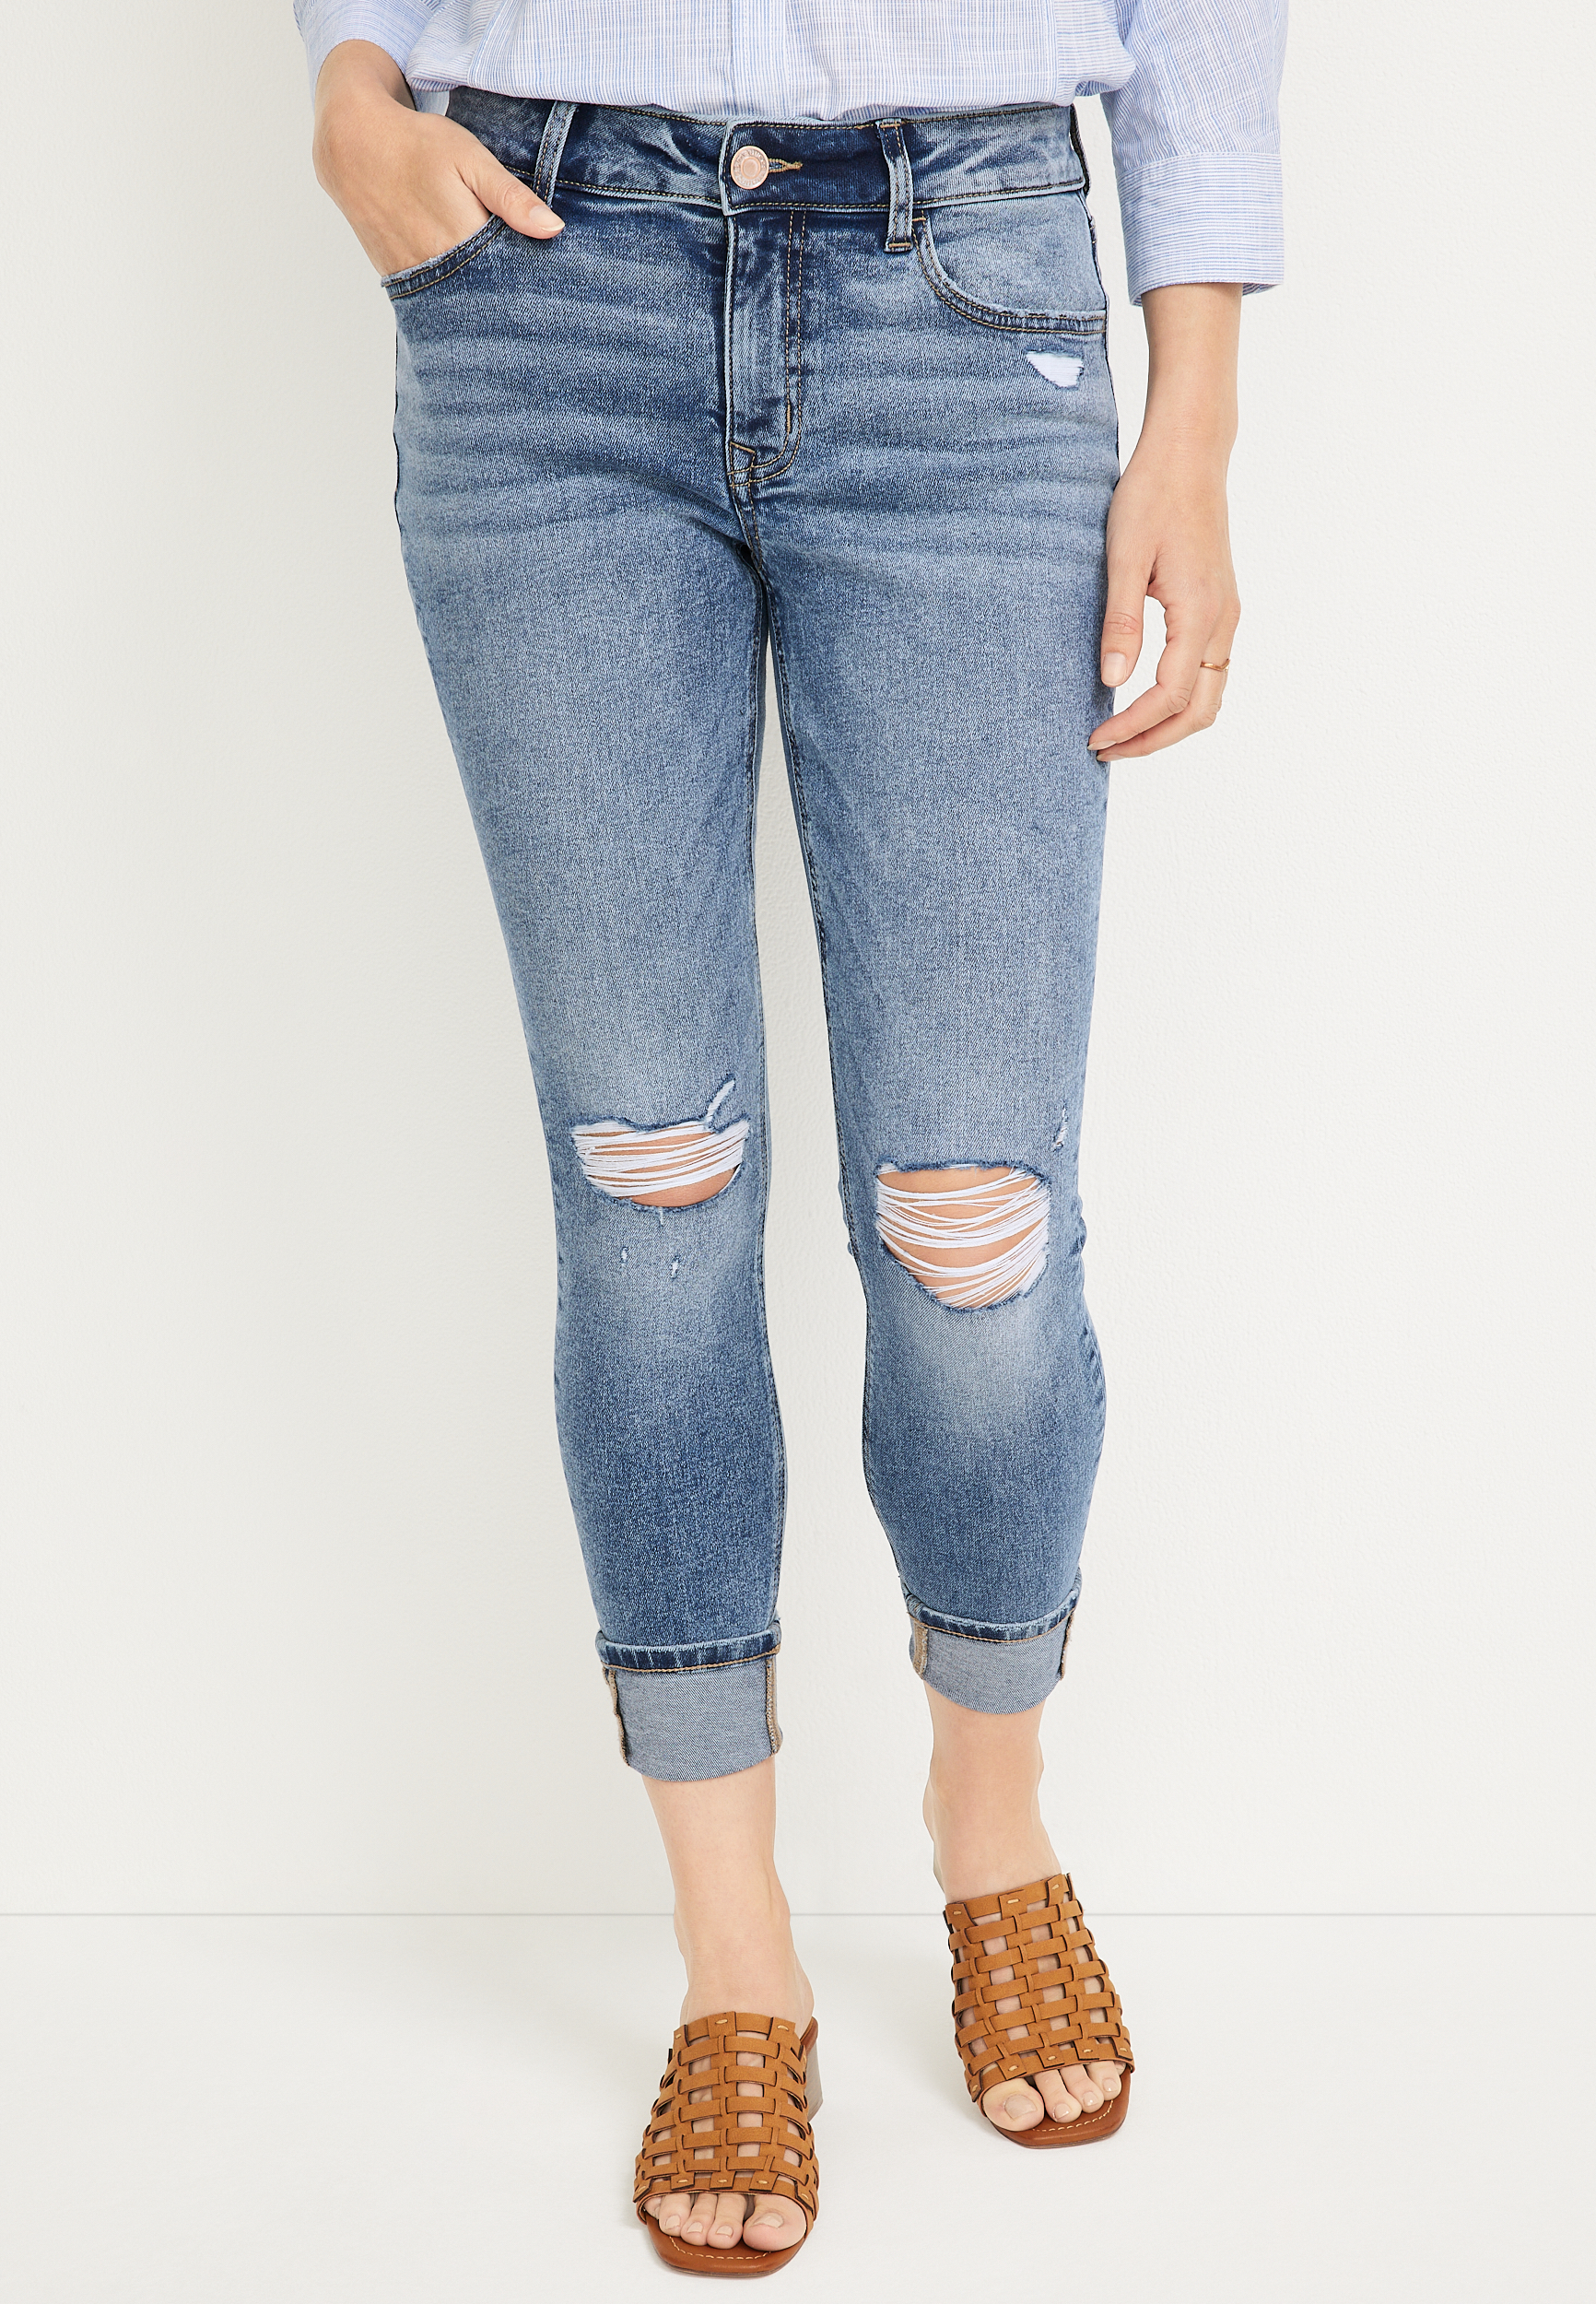 Årvågenhed økologisk Forladt m jeans by maurices™ Super Skinny Ankle Mid Rise Ripped Jean | maurices